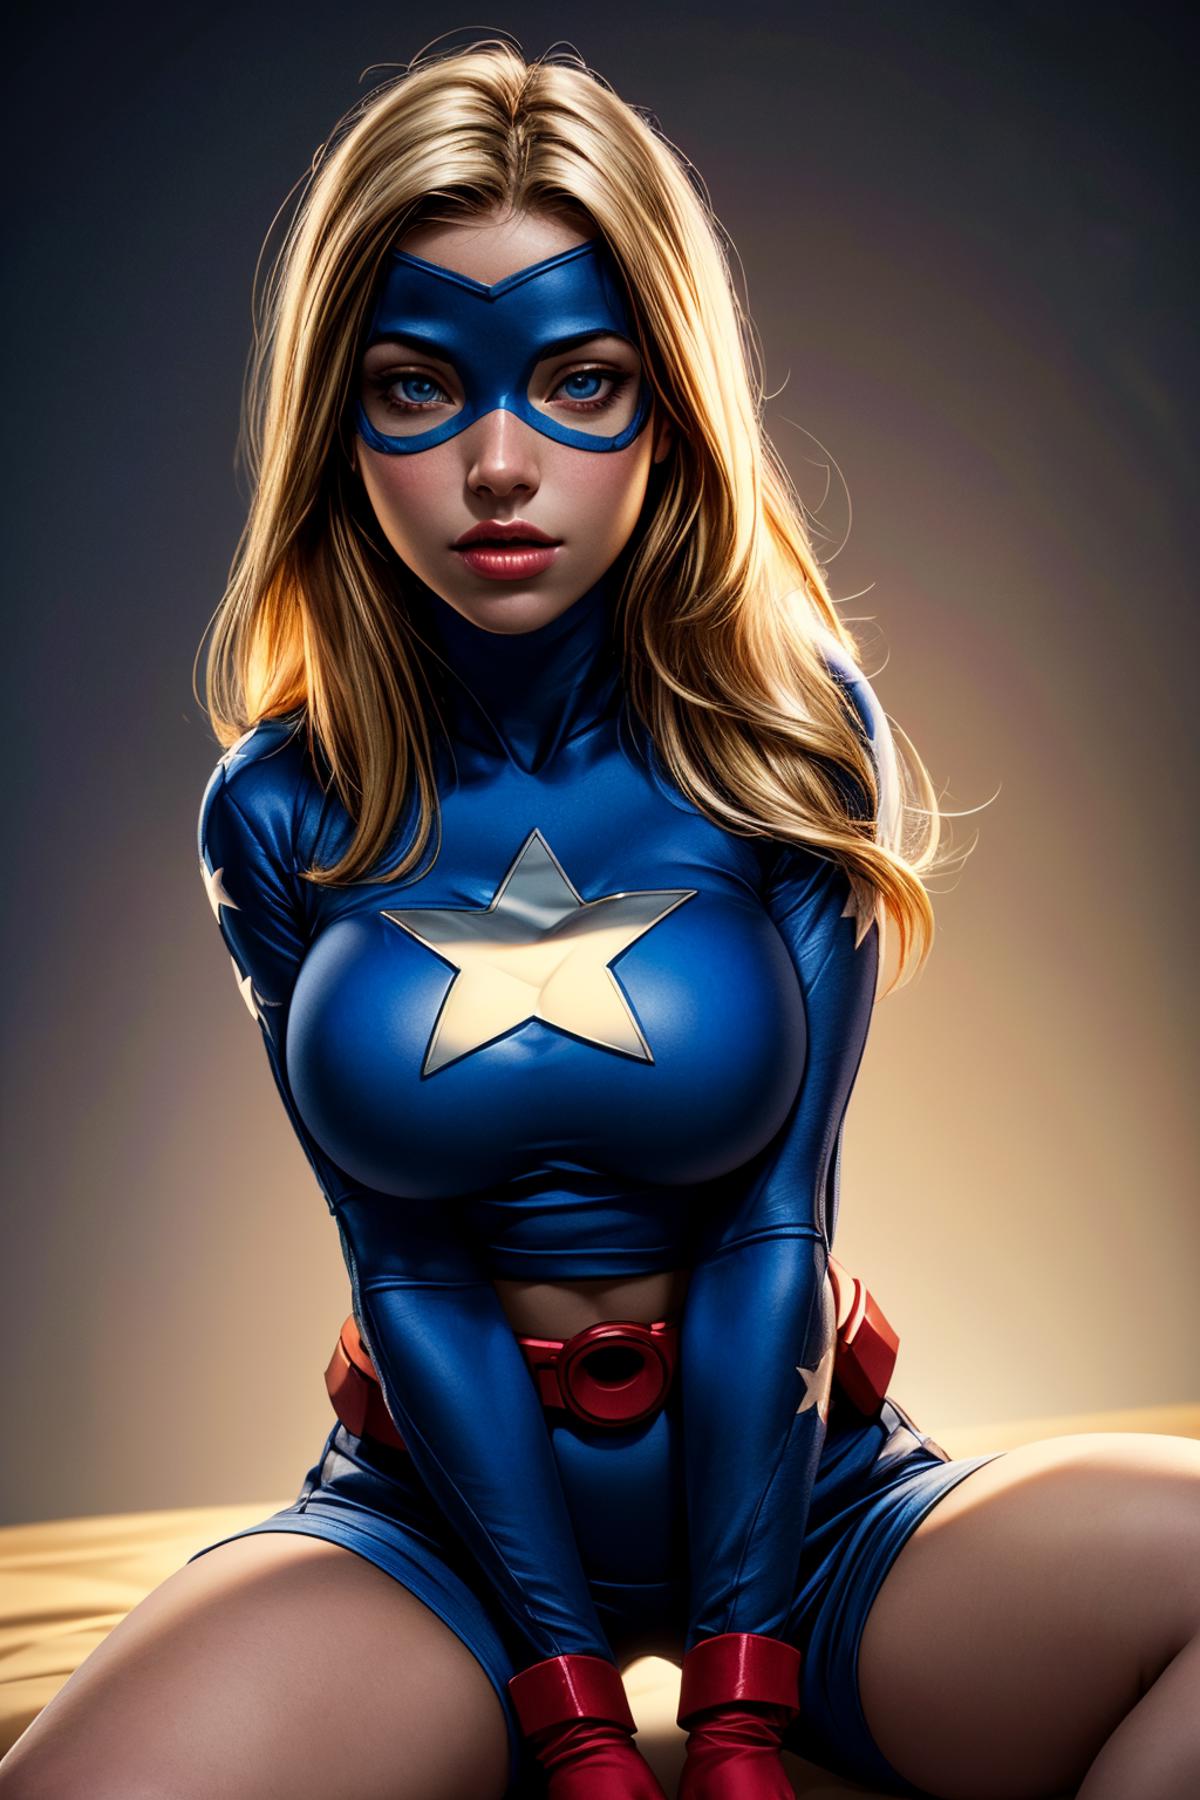 Stargirl (DC Comics) image by iJWiTGS8